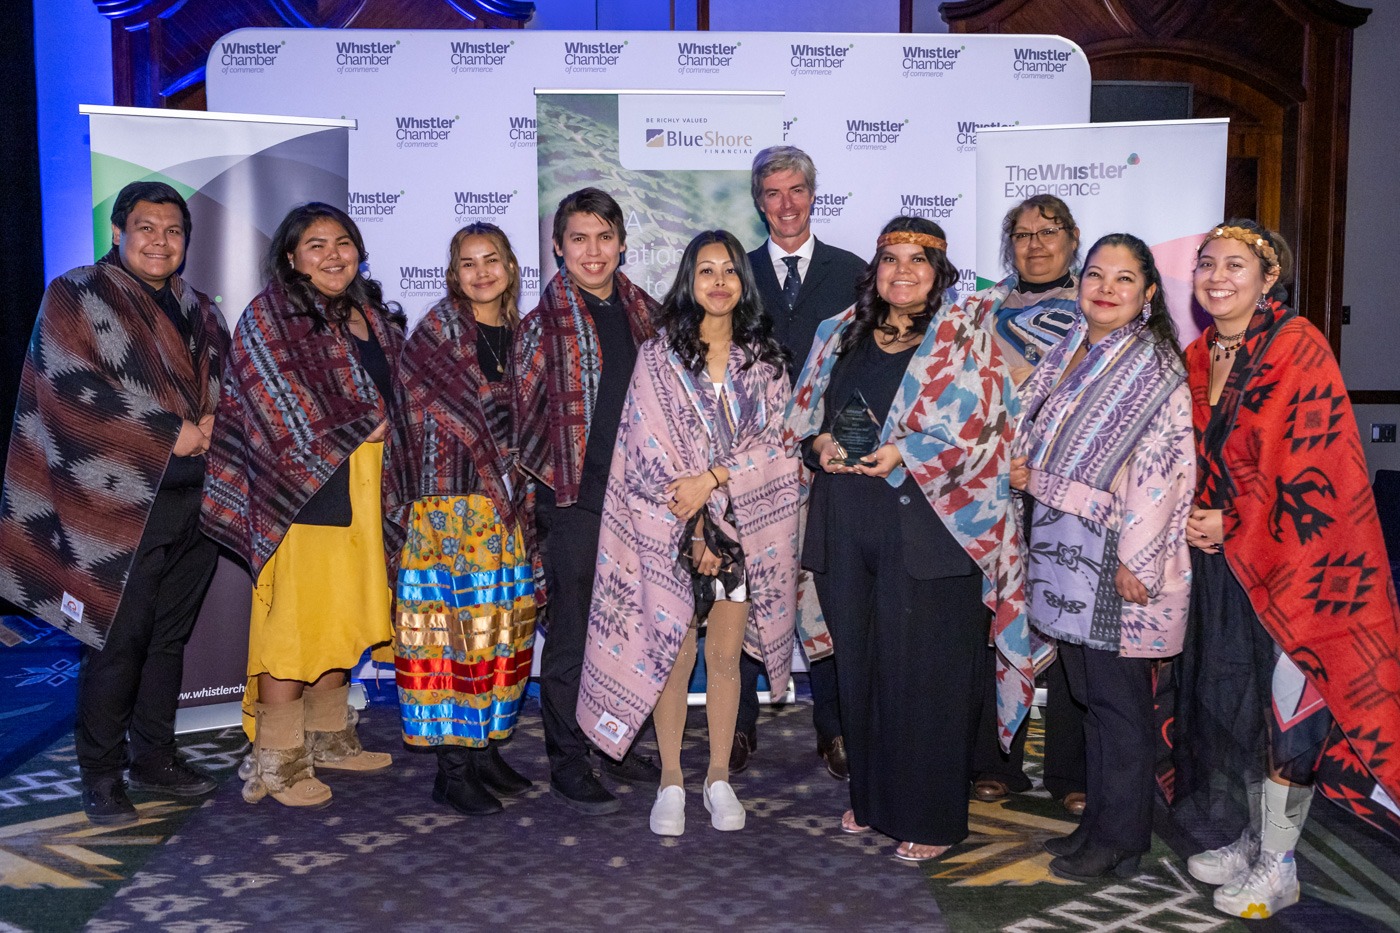 SLCC Ambassadors win Citizens of the Year Award